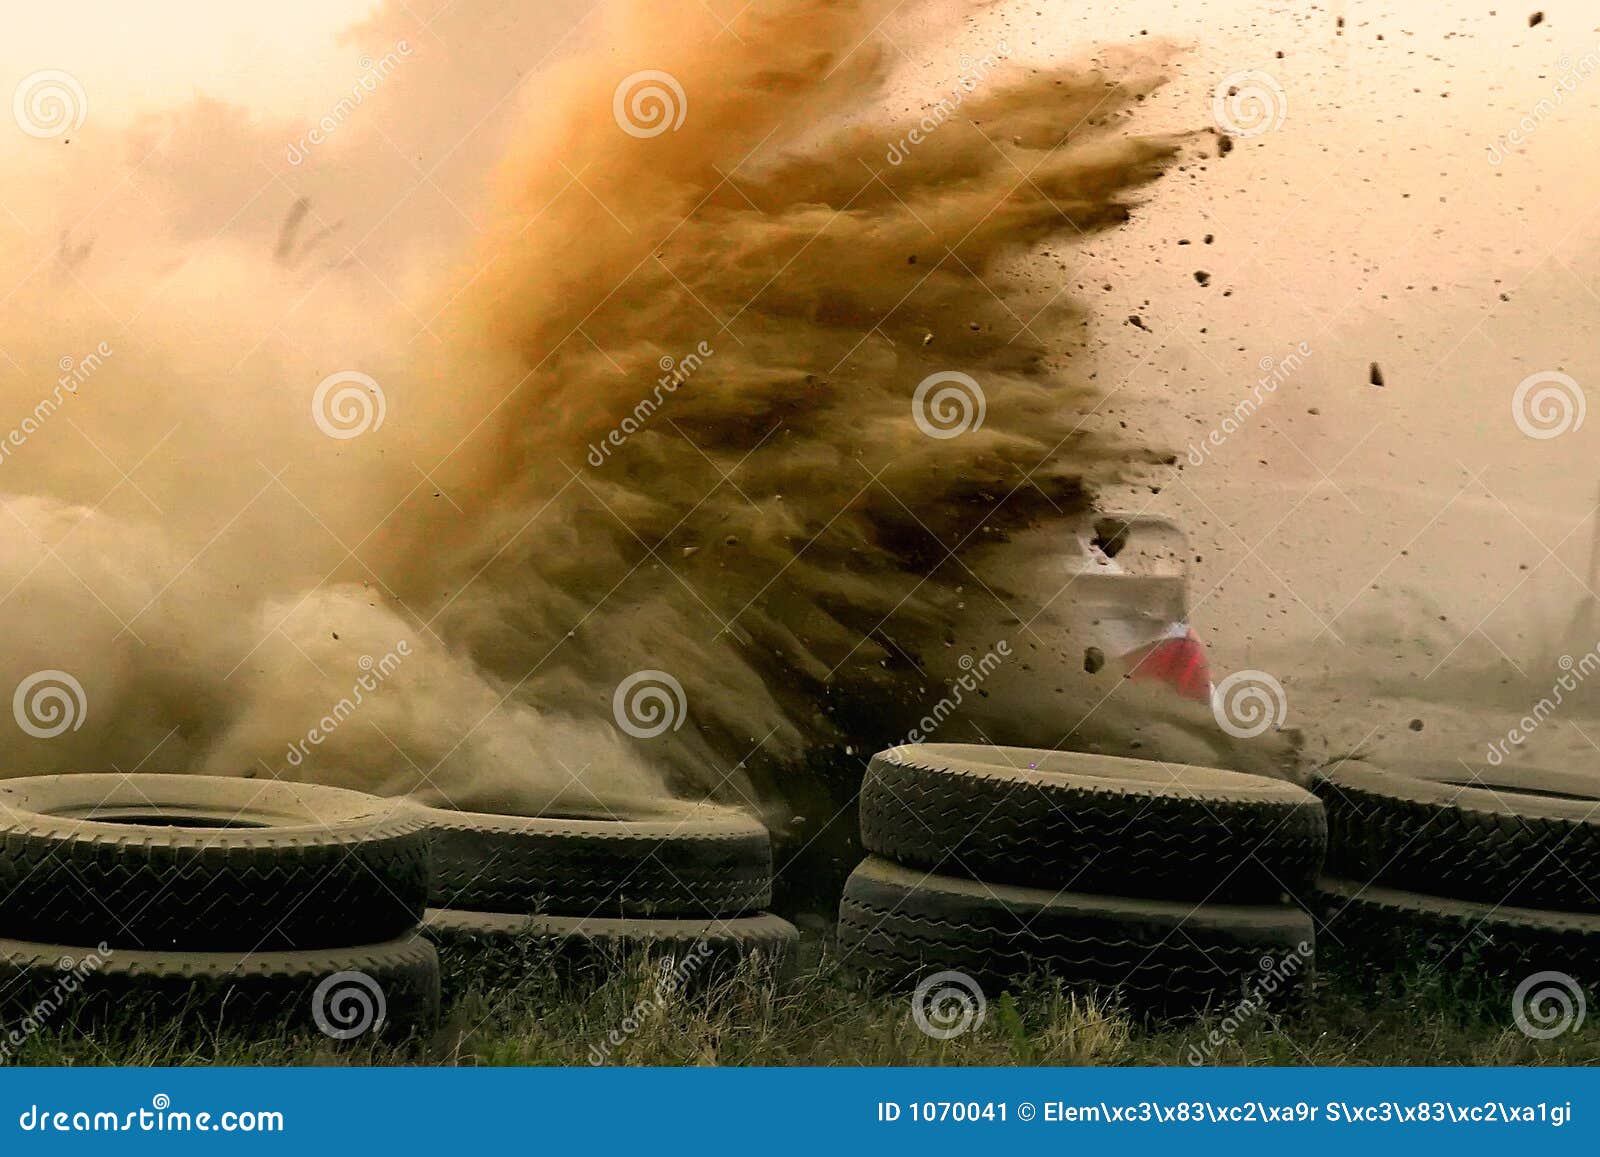 dusty rally racing